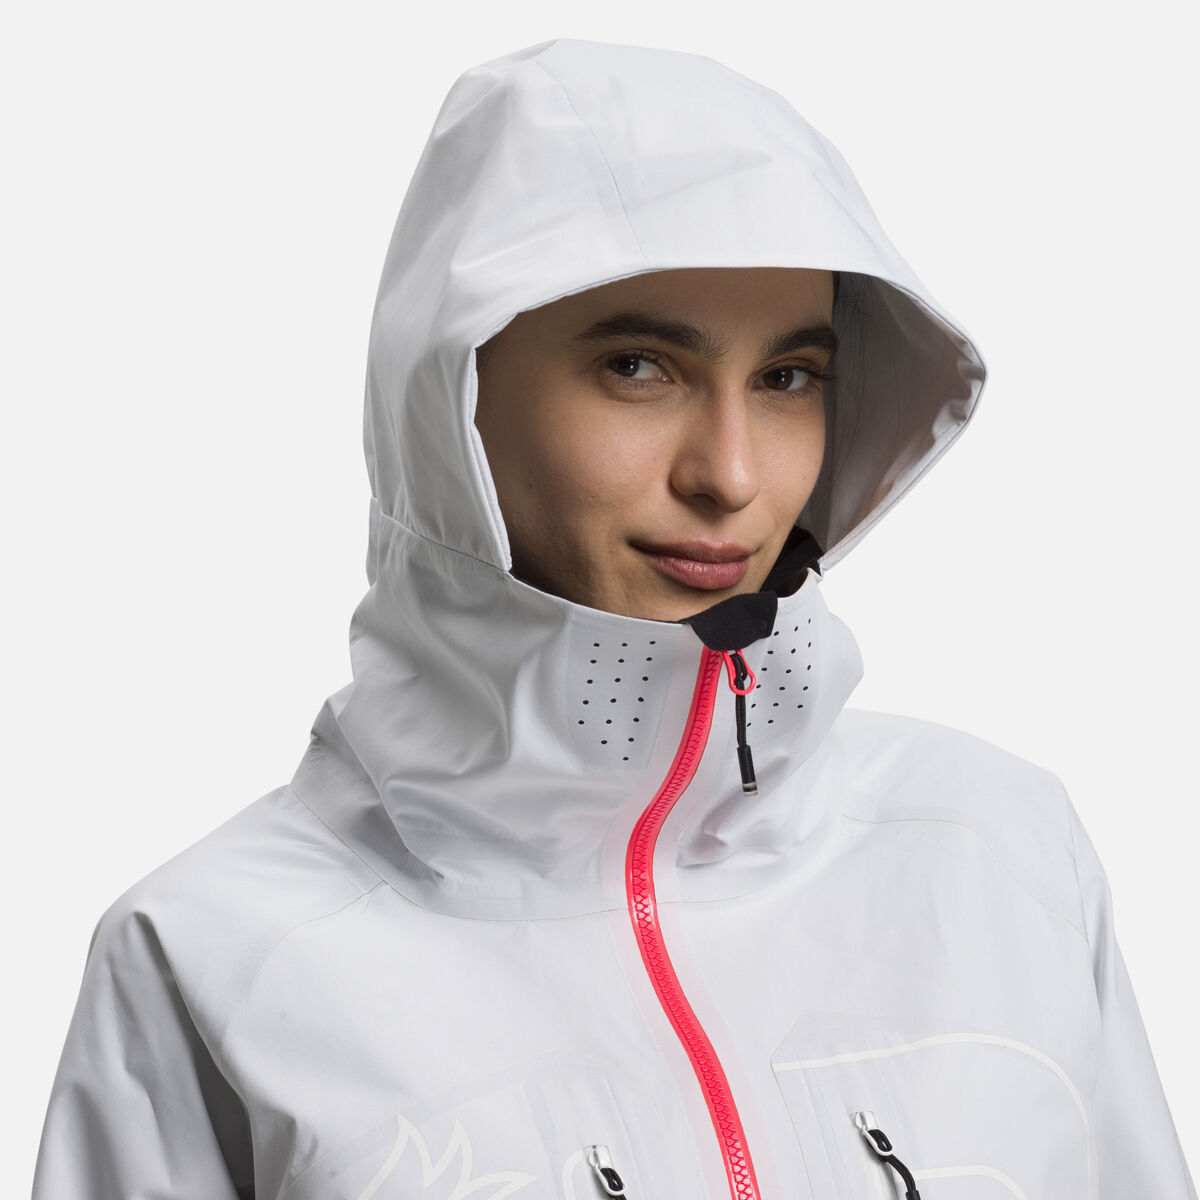 Women's Atelier S ski/snowboard jacket